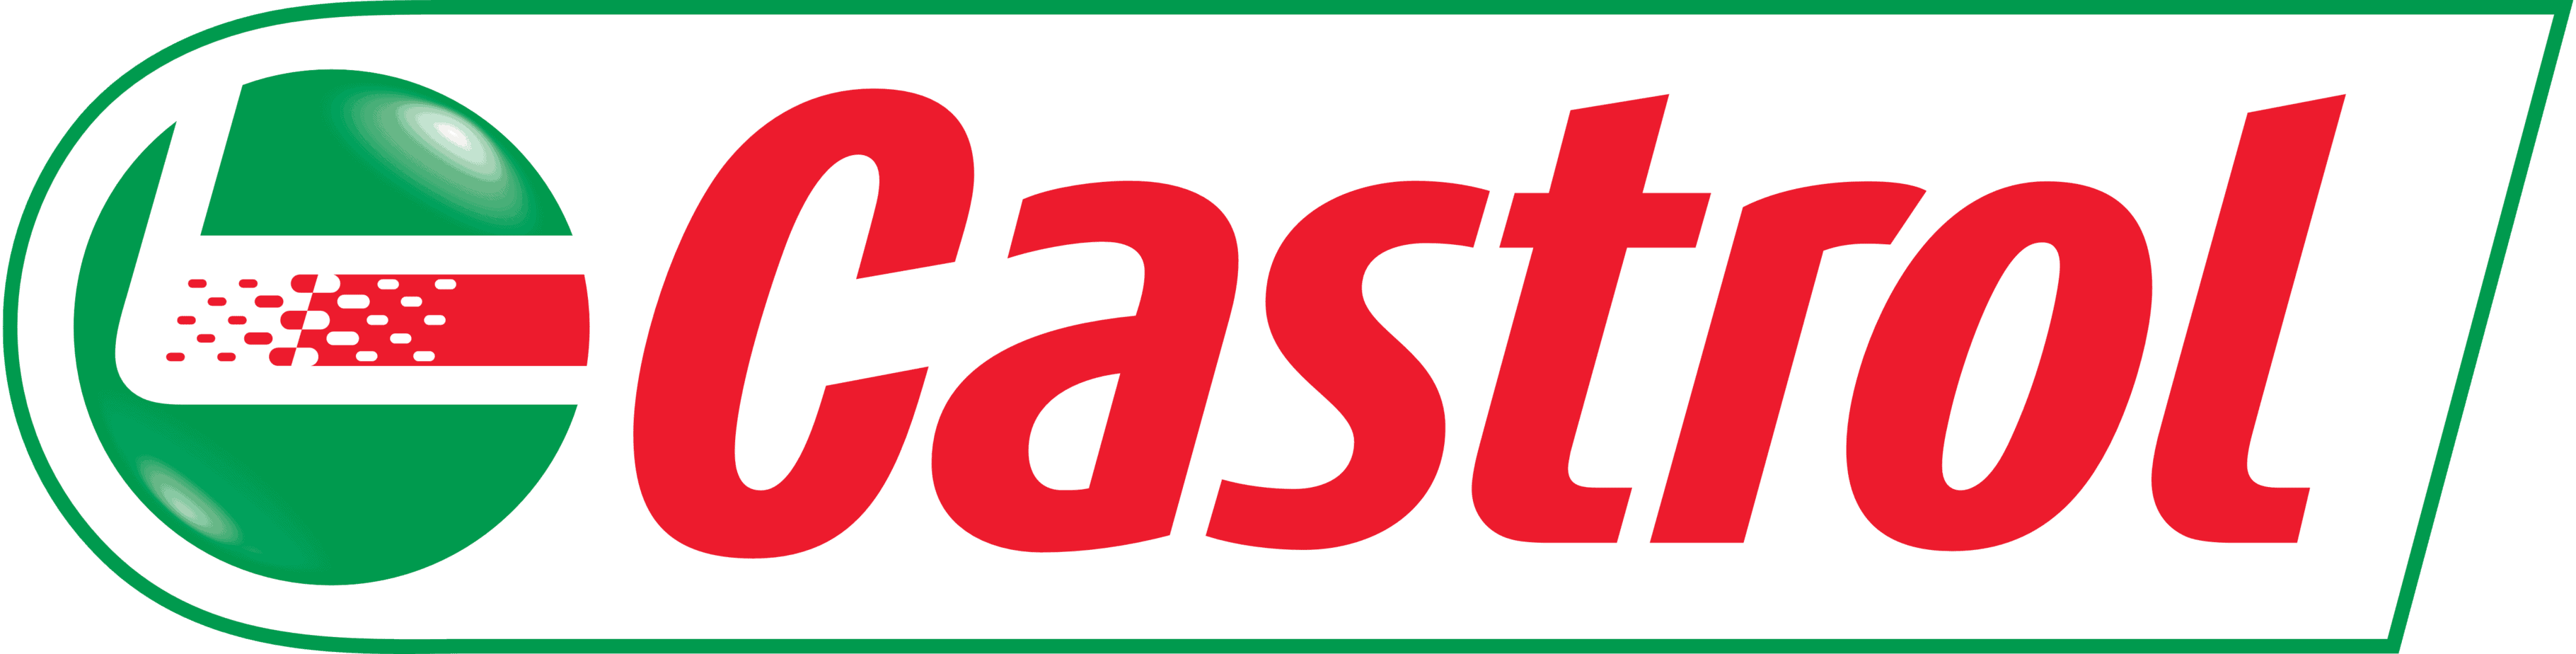 Castrol logo 3D transparent